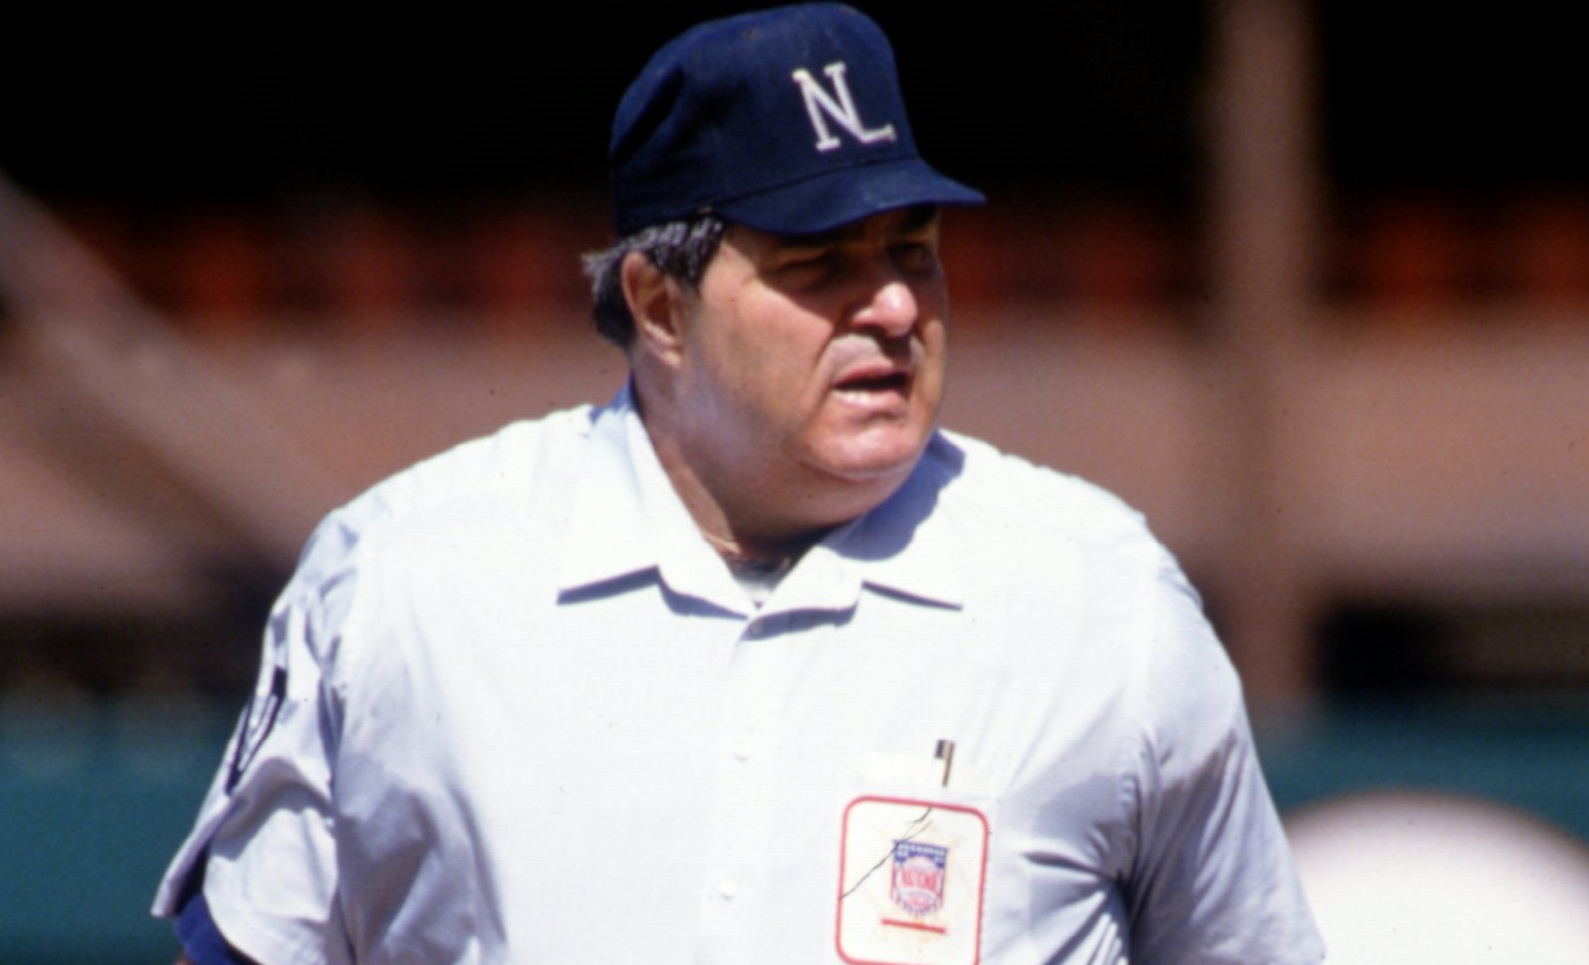 MLB umpire John McSherry